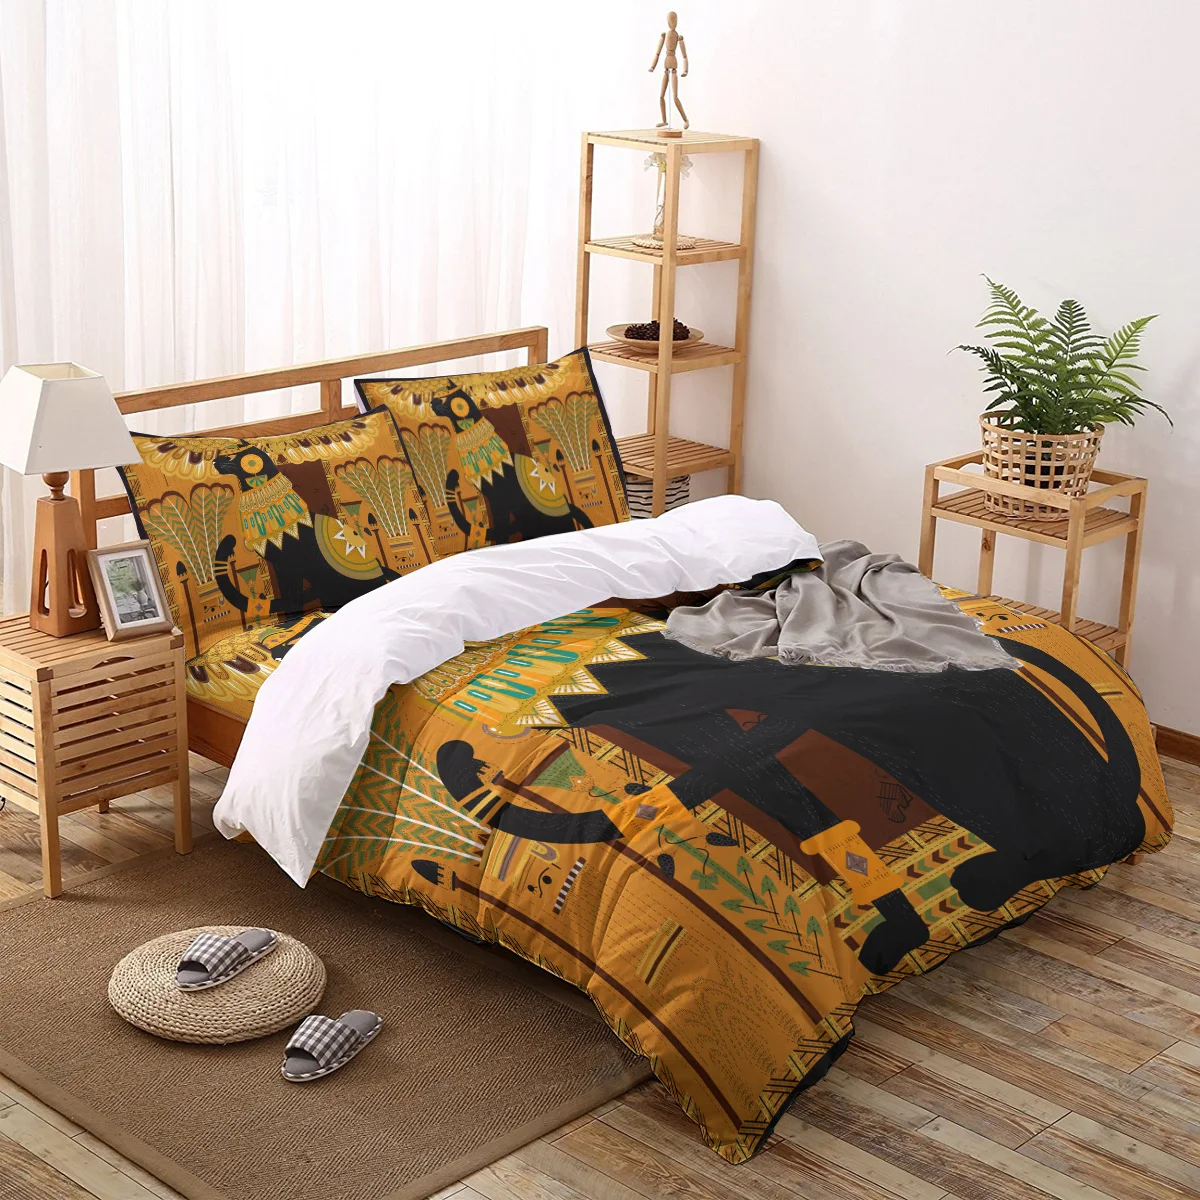 

Egypt Black Cat Totem Retro Kids Bedding Set Duvet Cover Sheet Pillowcase Adult Bed King Queen Full Twin Home Textile